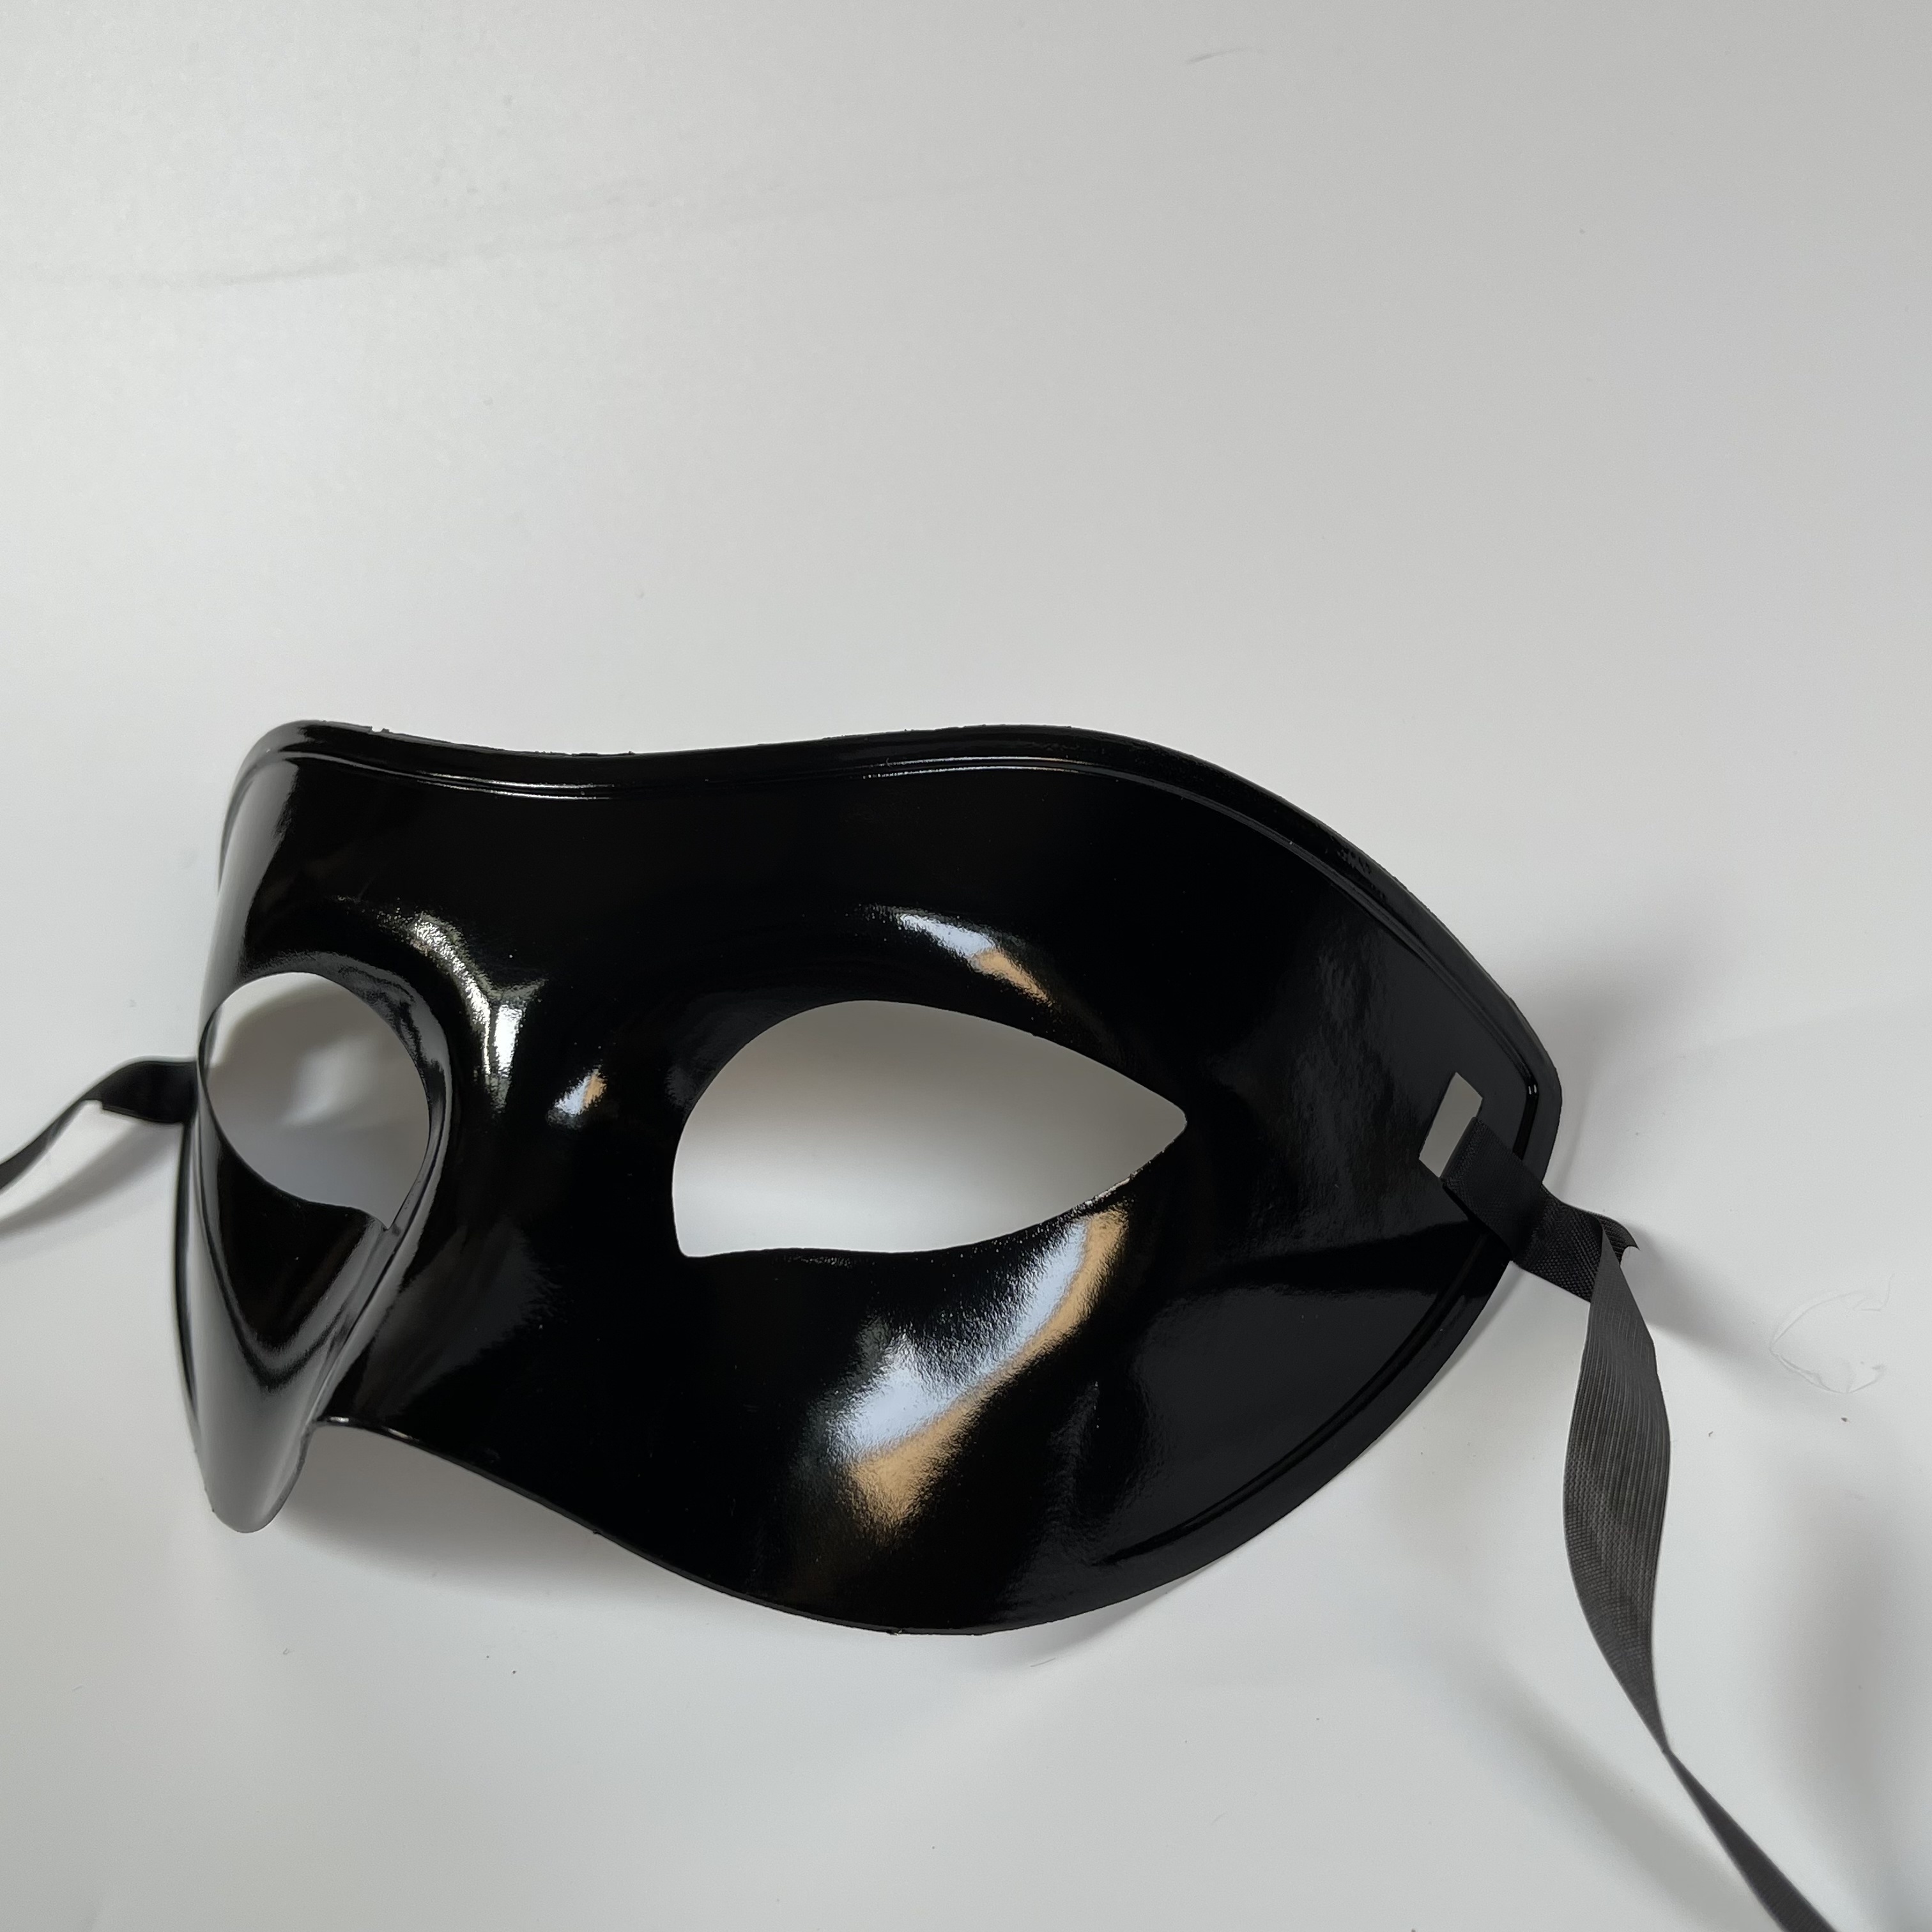 Antifaz Mascara Veneciana Blanco Negro Disfraz X 12 Unidades